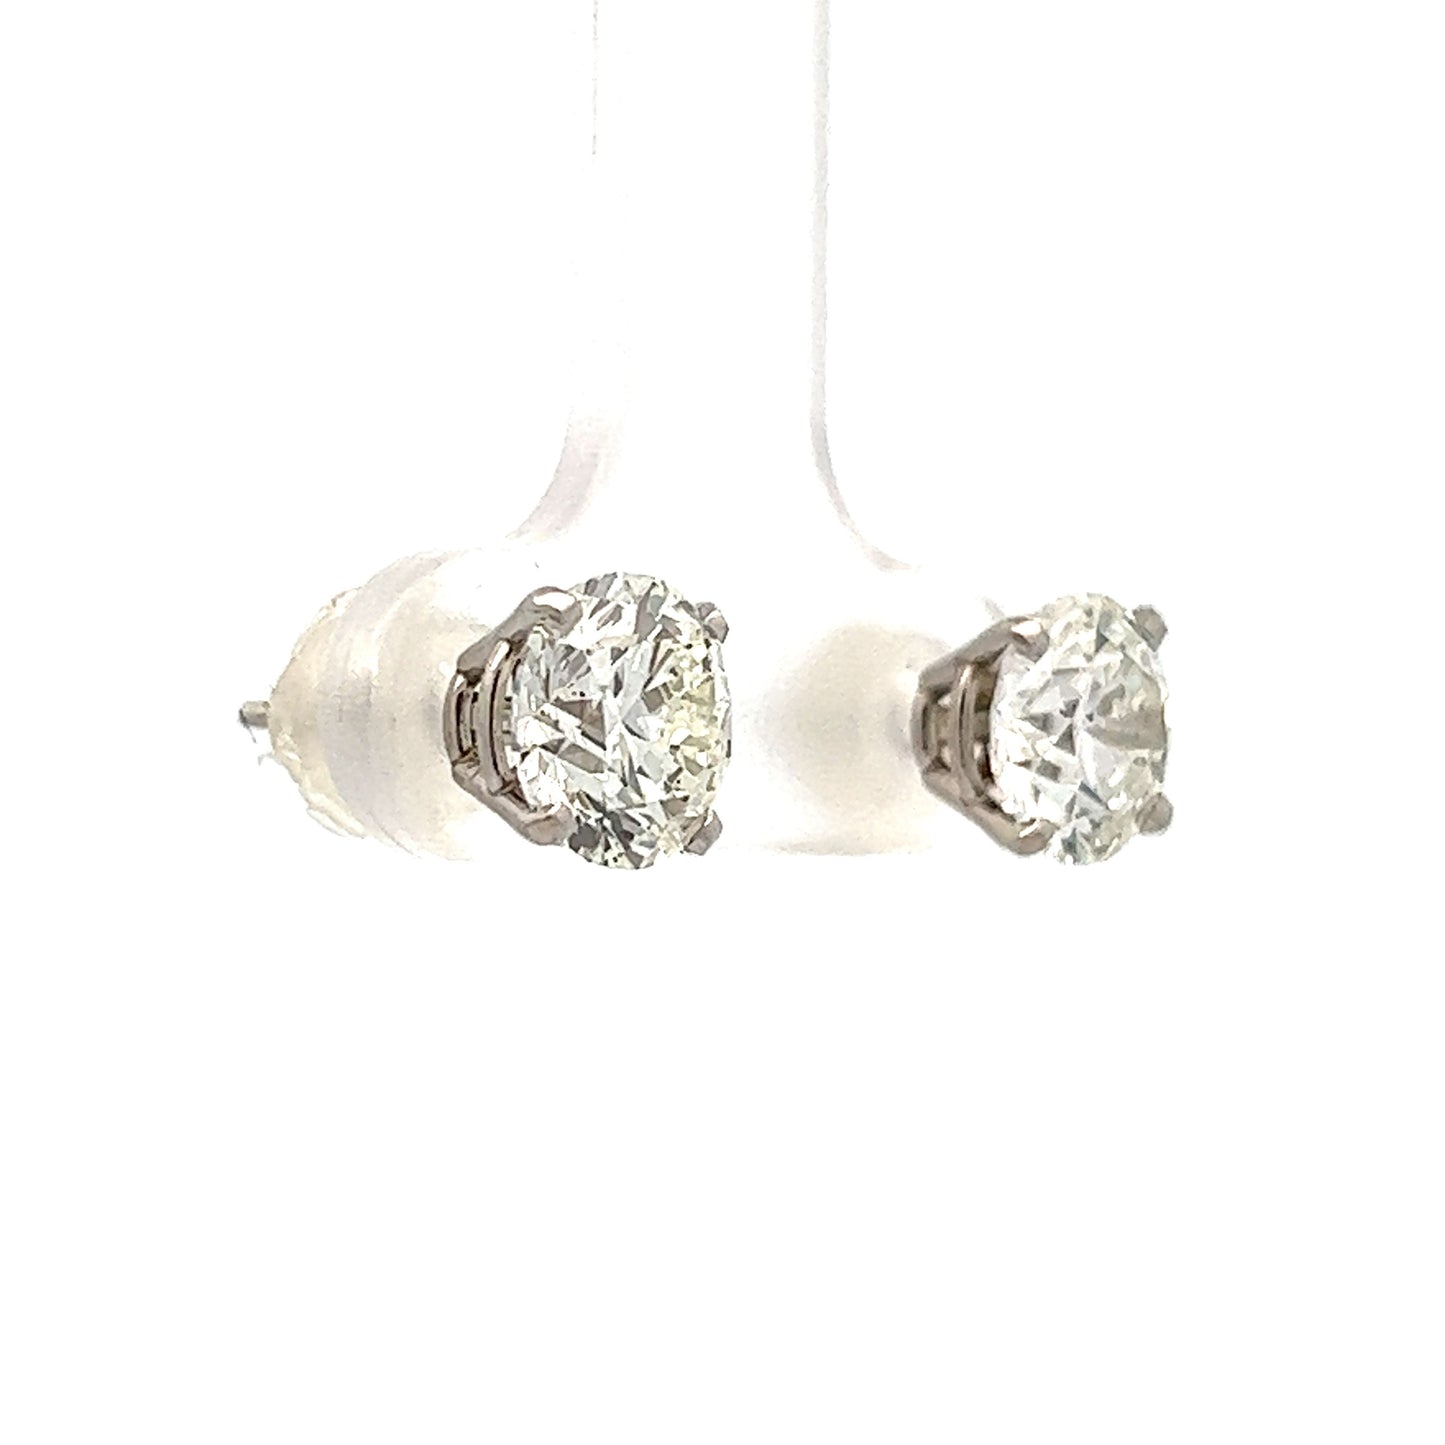 3.00 Carat Diamond Stud Earrings in 14k White Gold